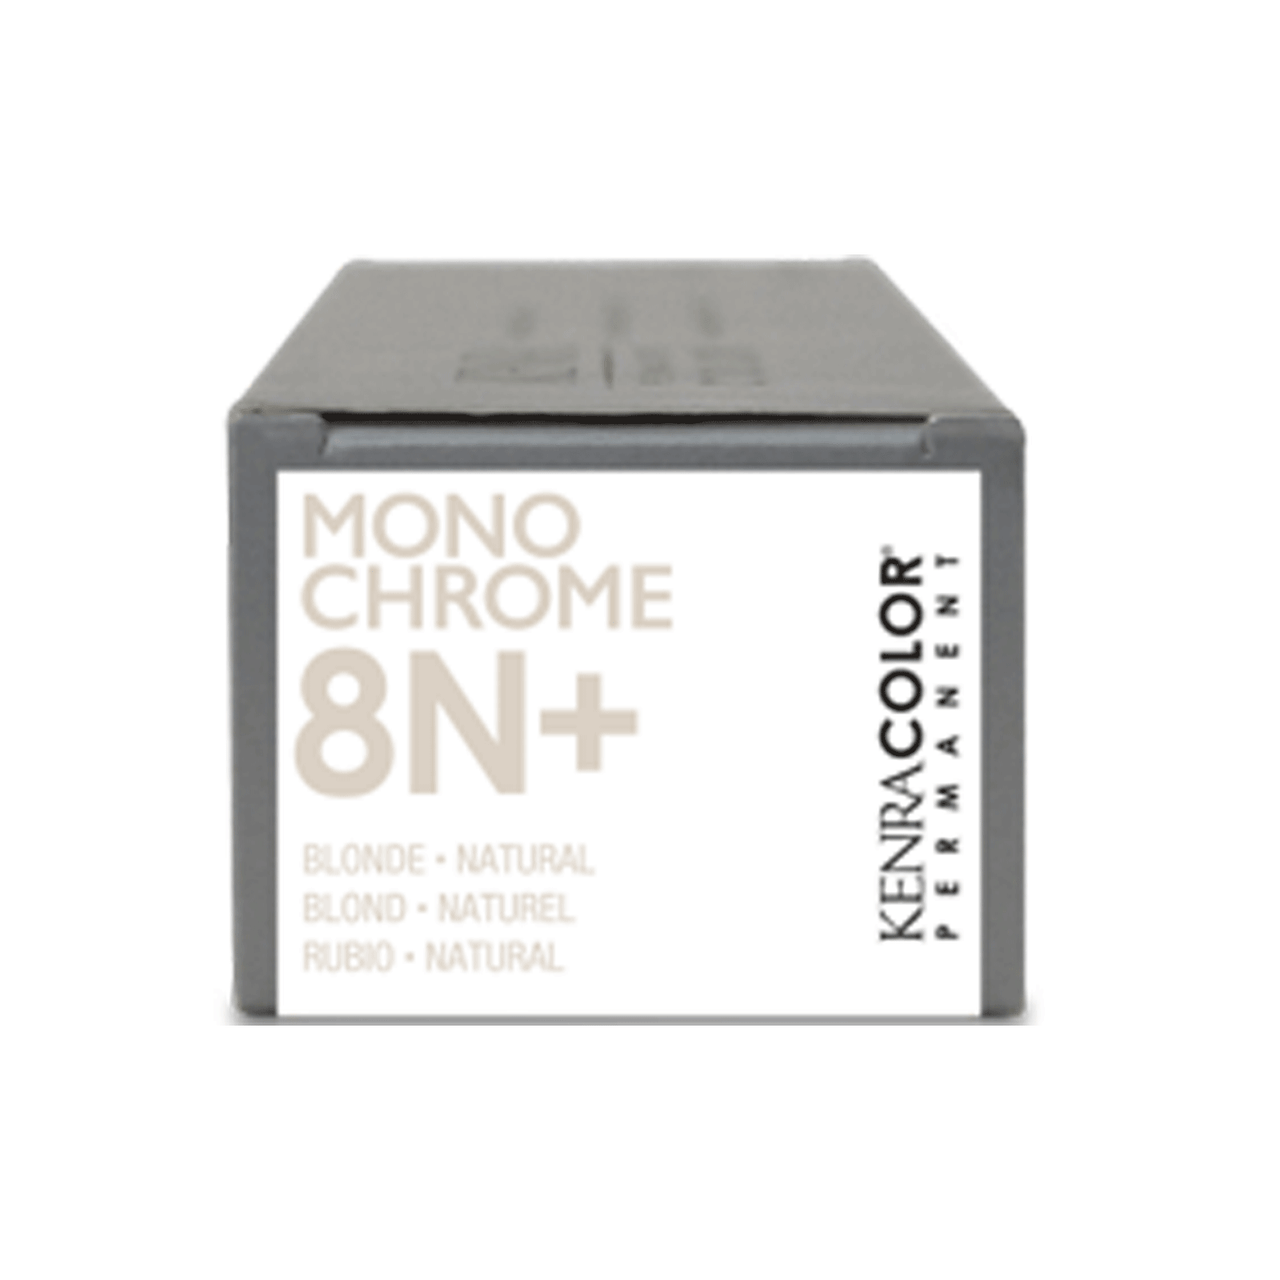 Kenra Professional MonoChrome Color - 8N+ Blonde Natural